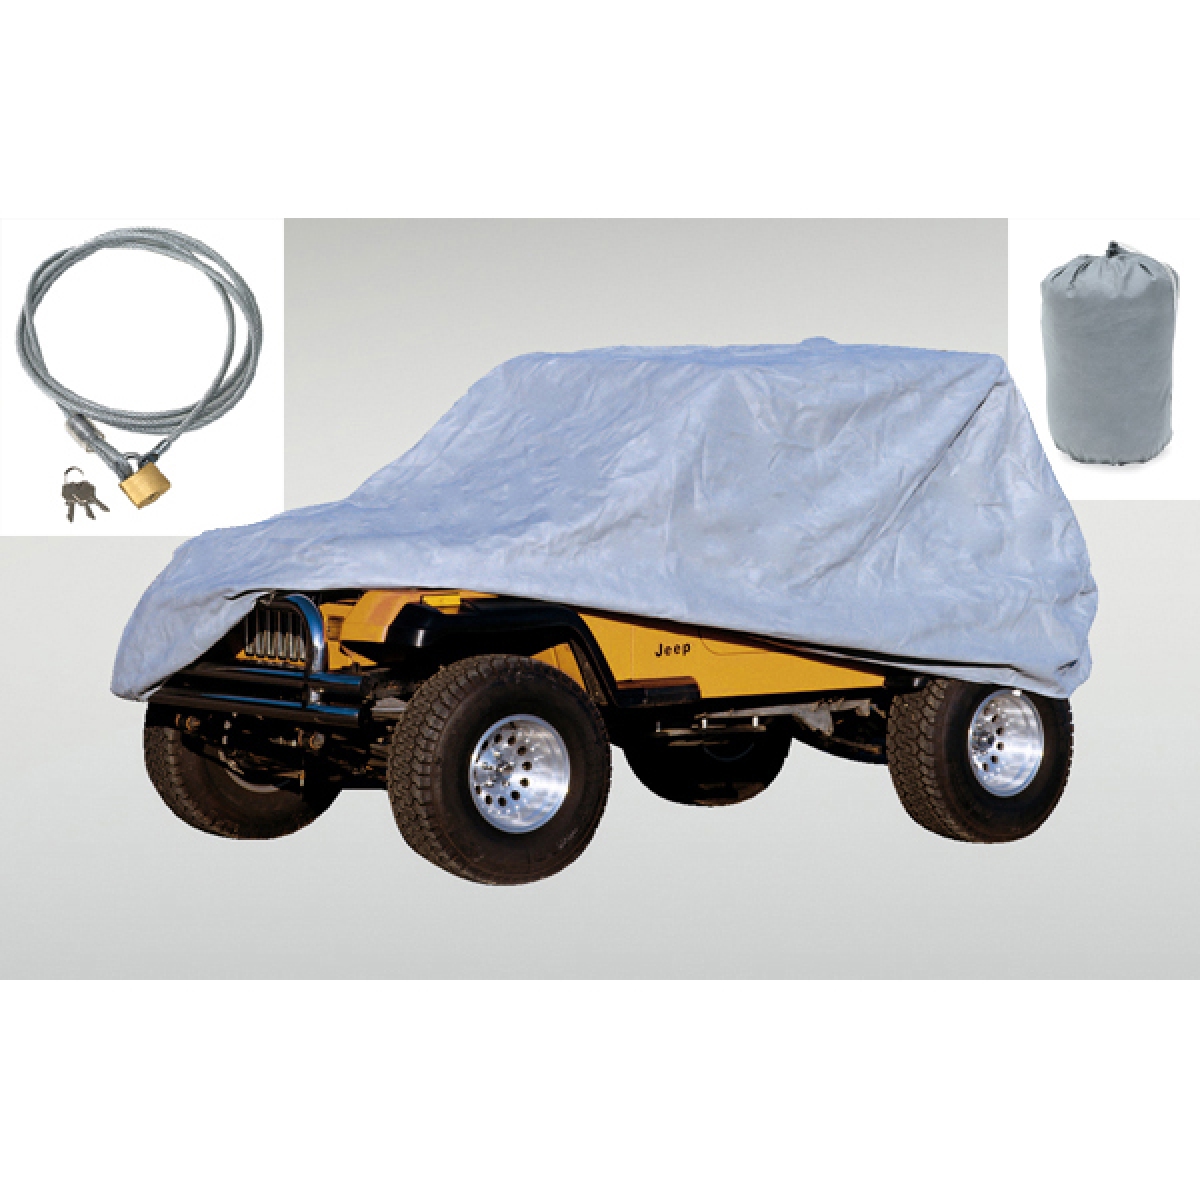 Abdeckung / Trail Cover Jeep Wrangler JKU